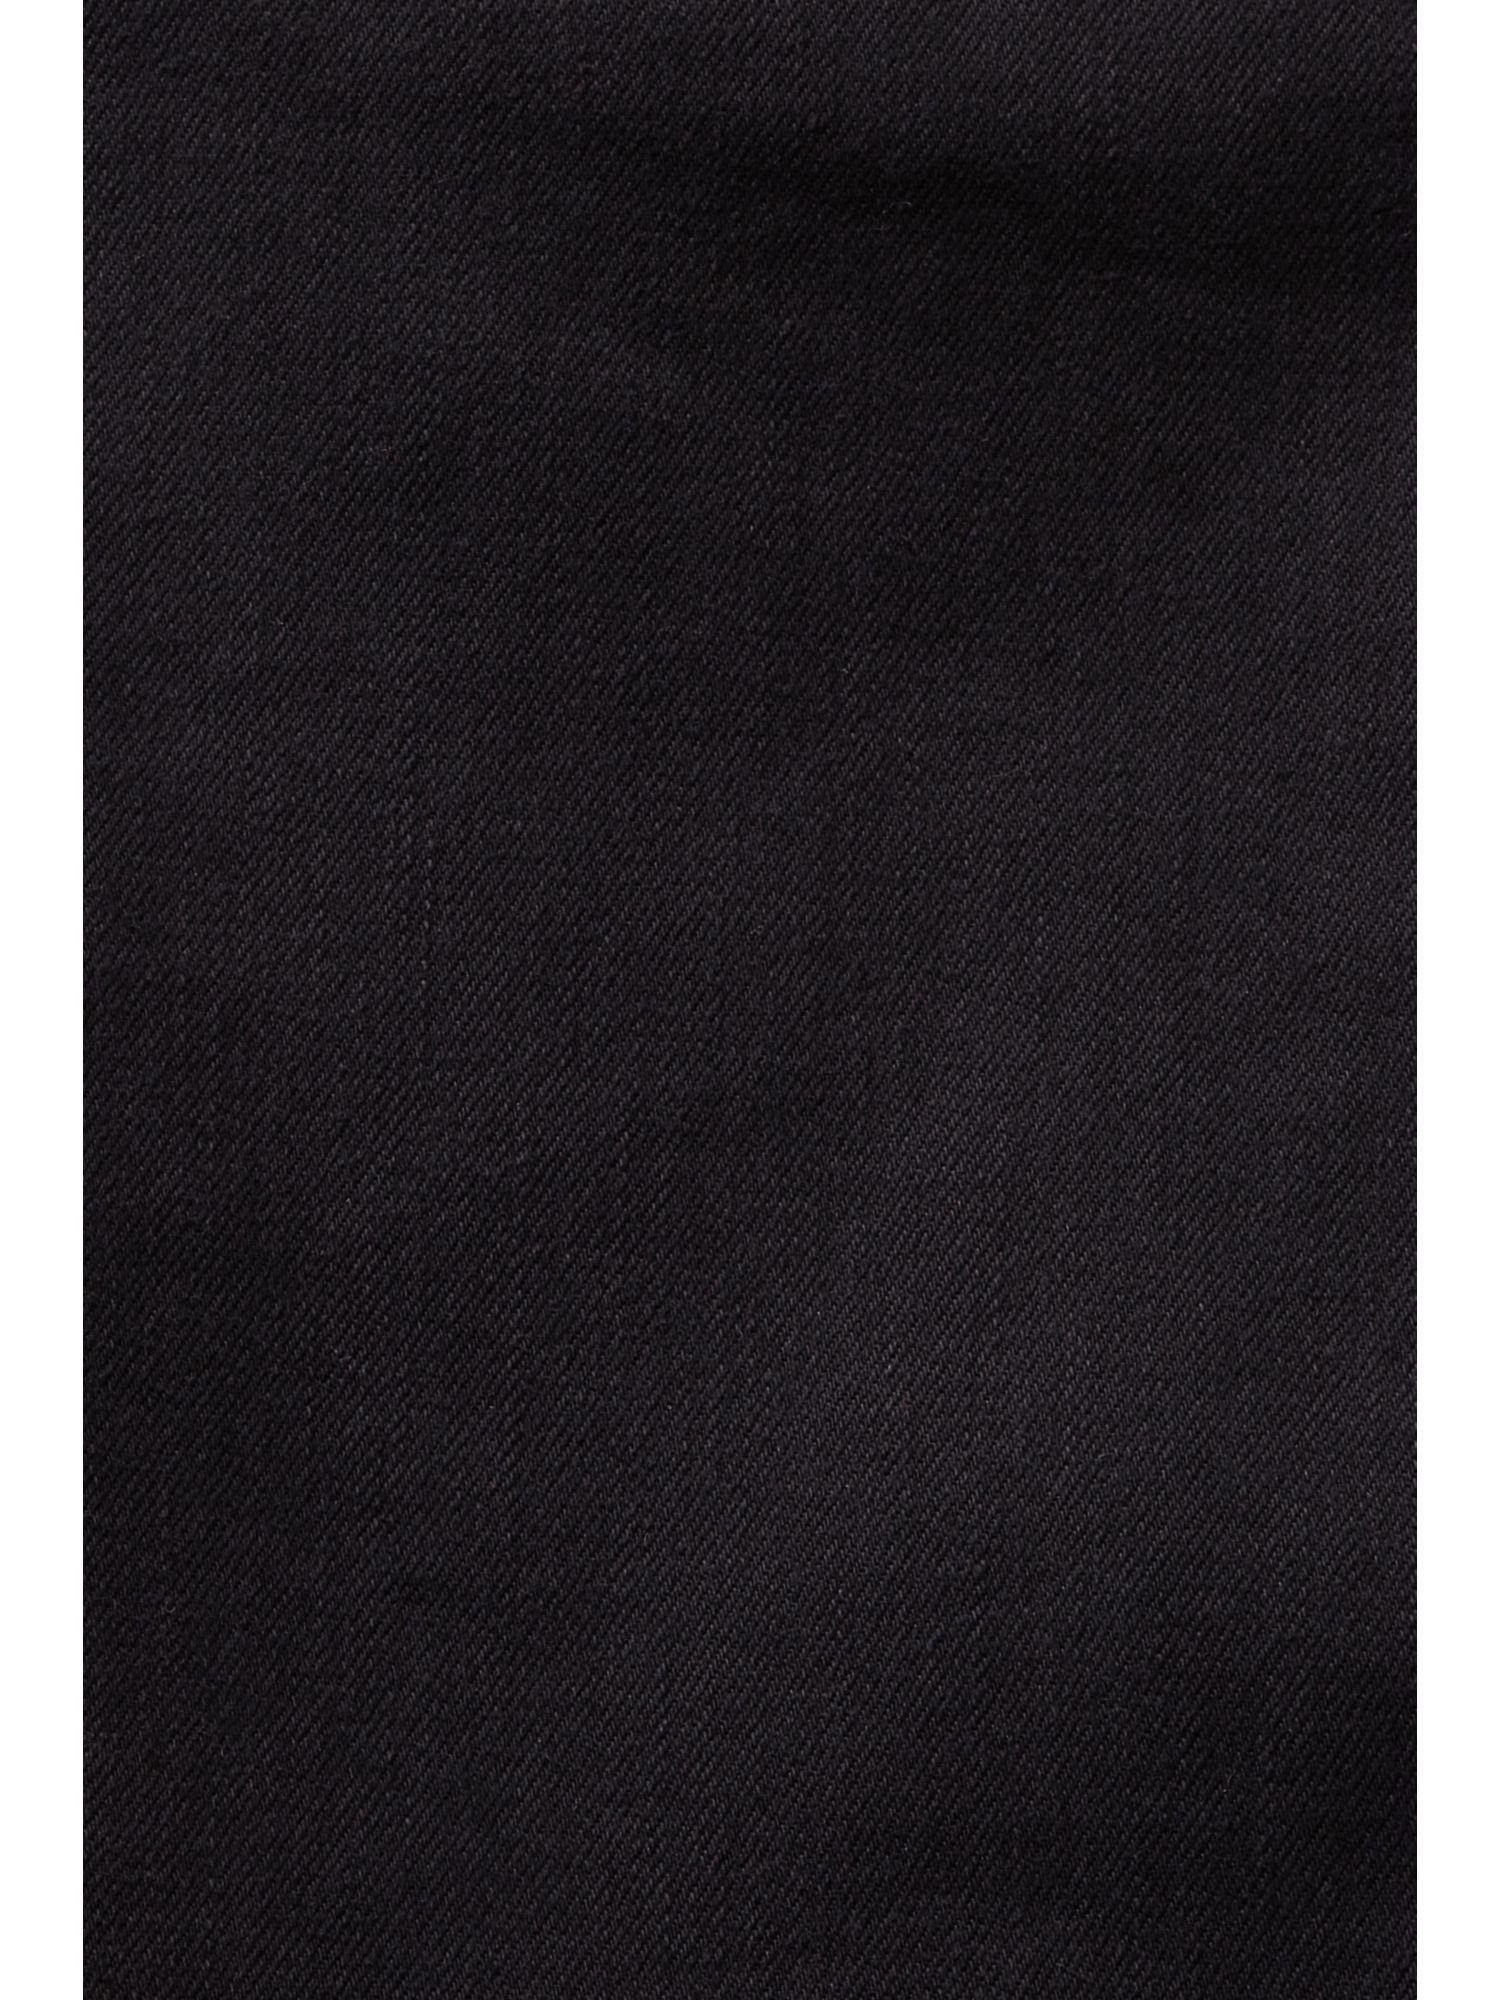 Bund BLACK Stretchige mittelhohem by edc mit Esprit Stretch-Hose Slim-Fit-Hose